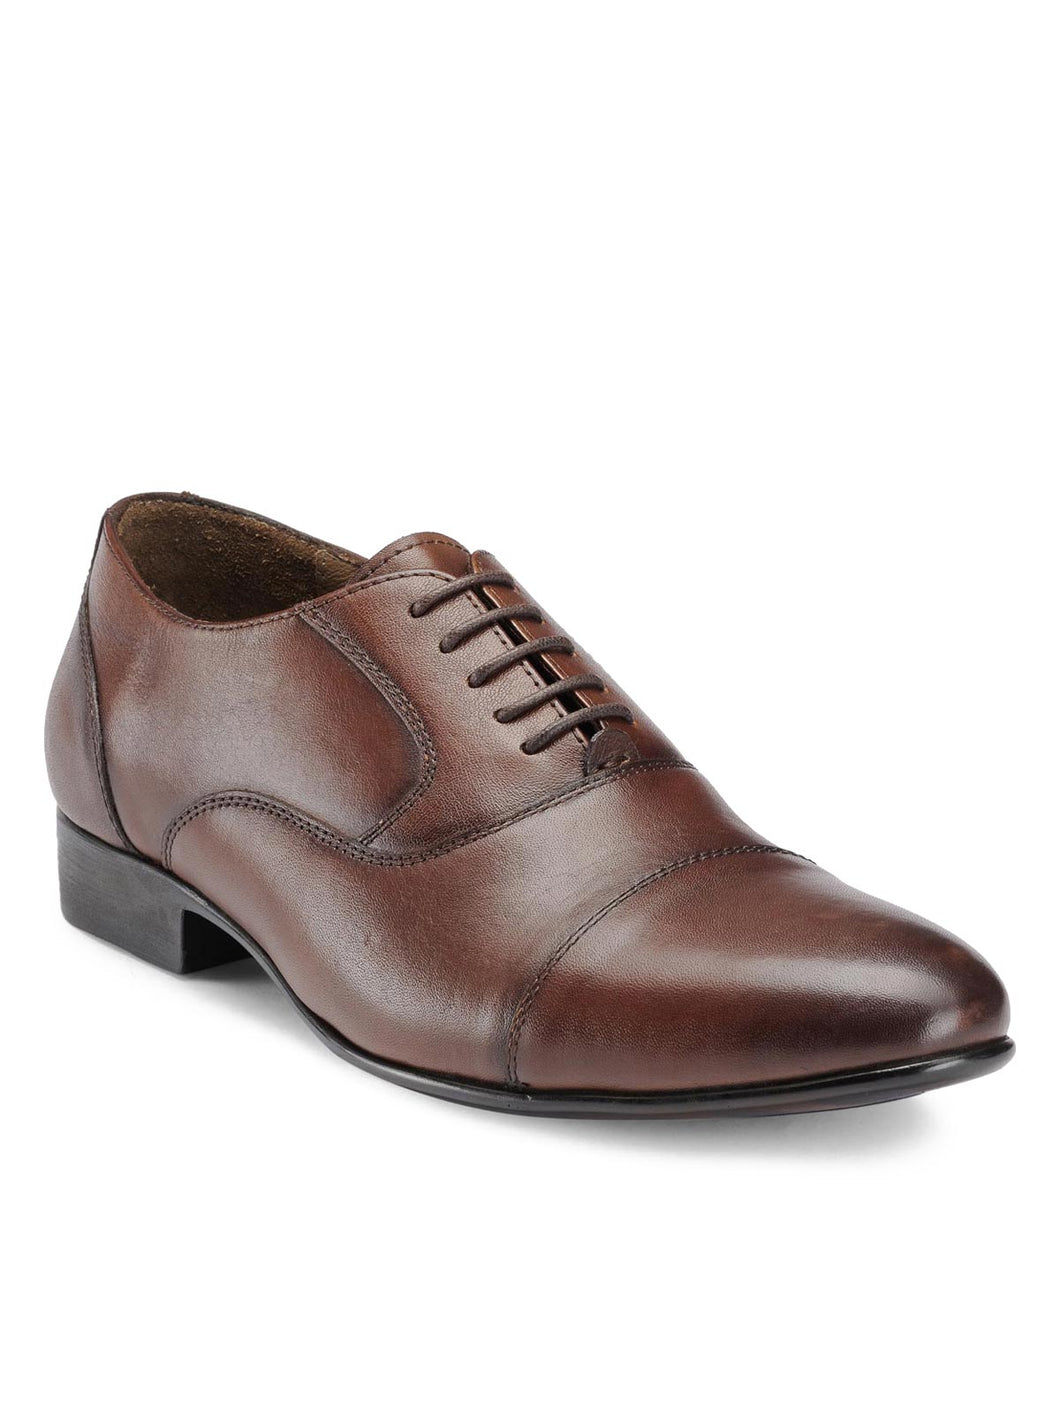 Teakwood Genuine Leather Oxford shoes